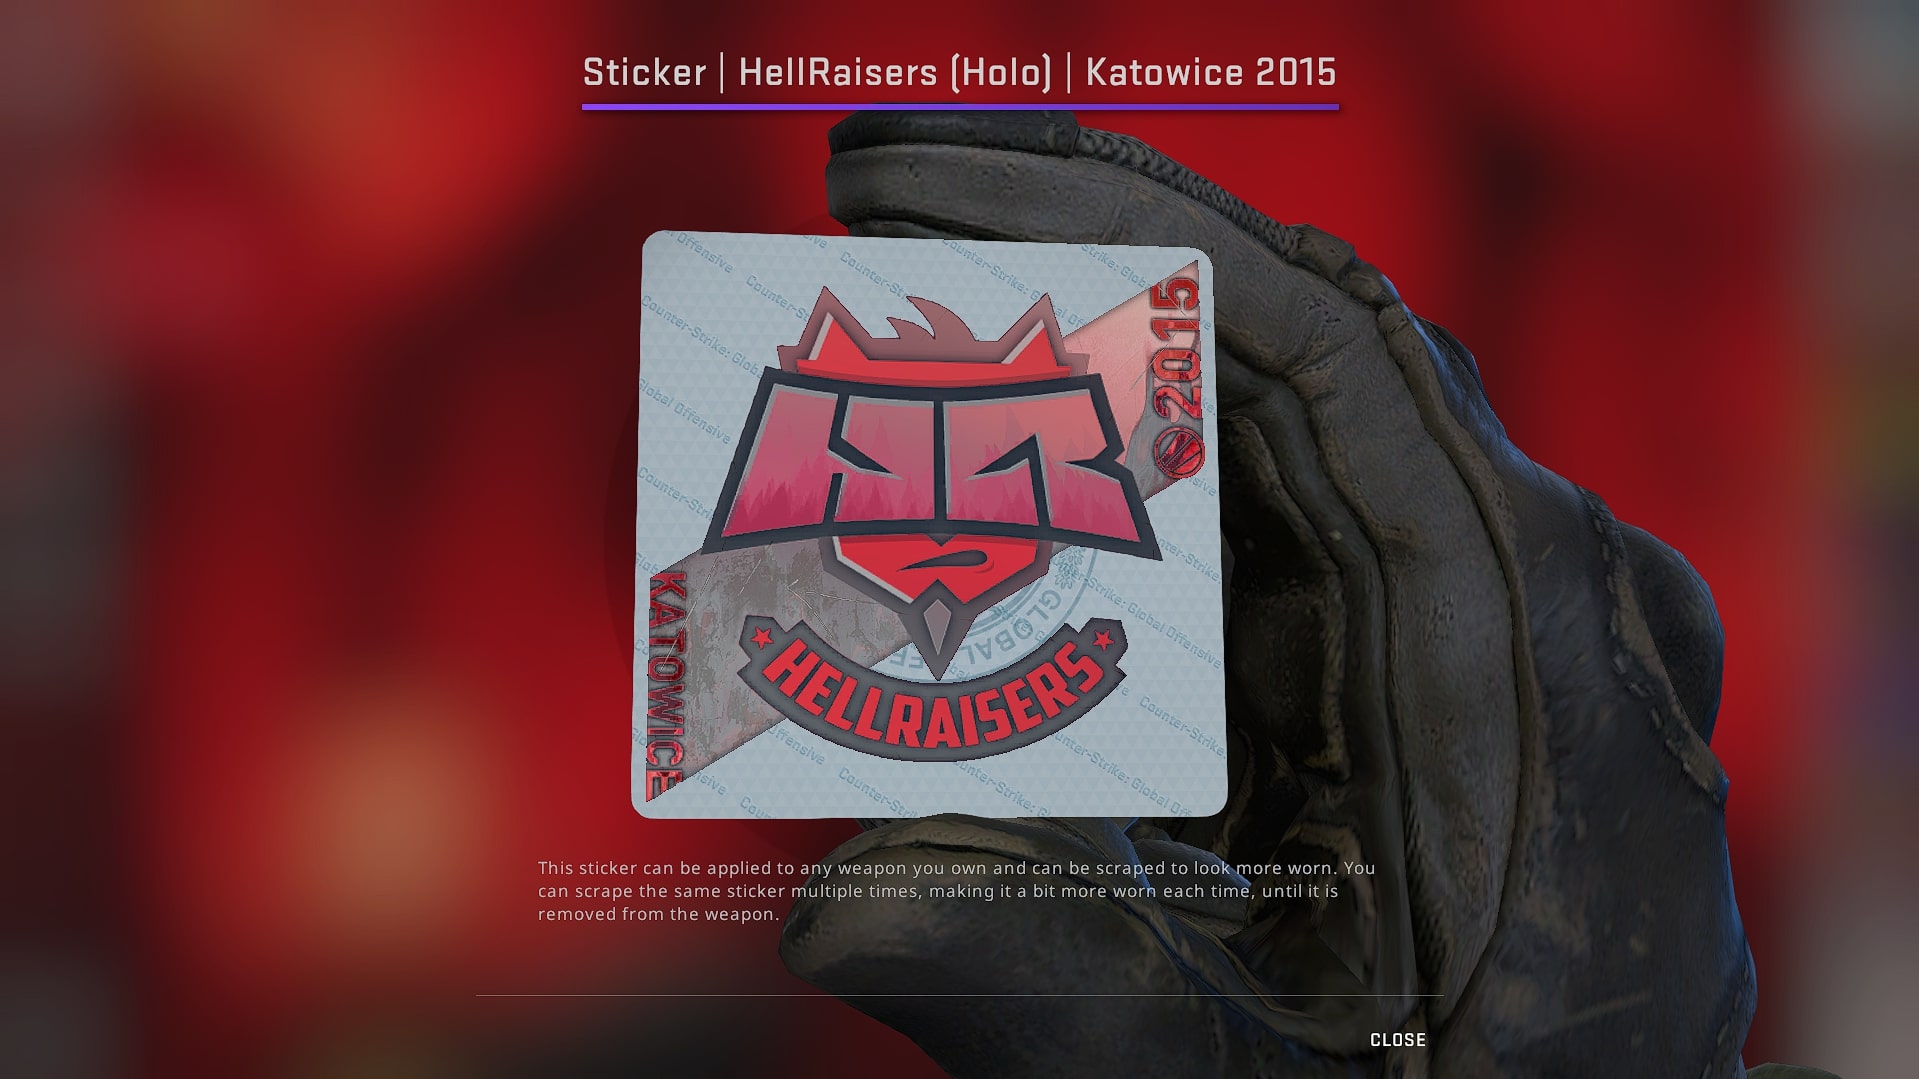 Katowice 2015 HellRaisers (Holo)